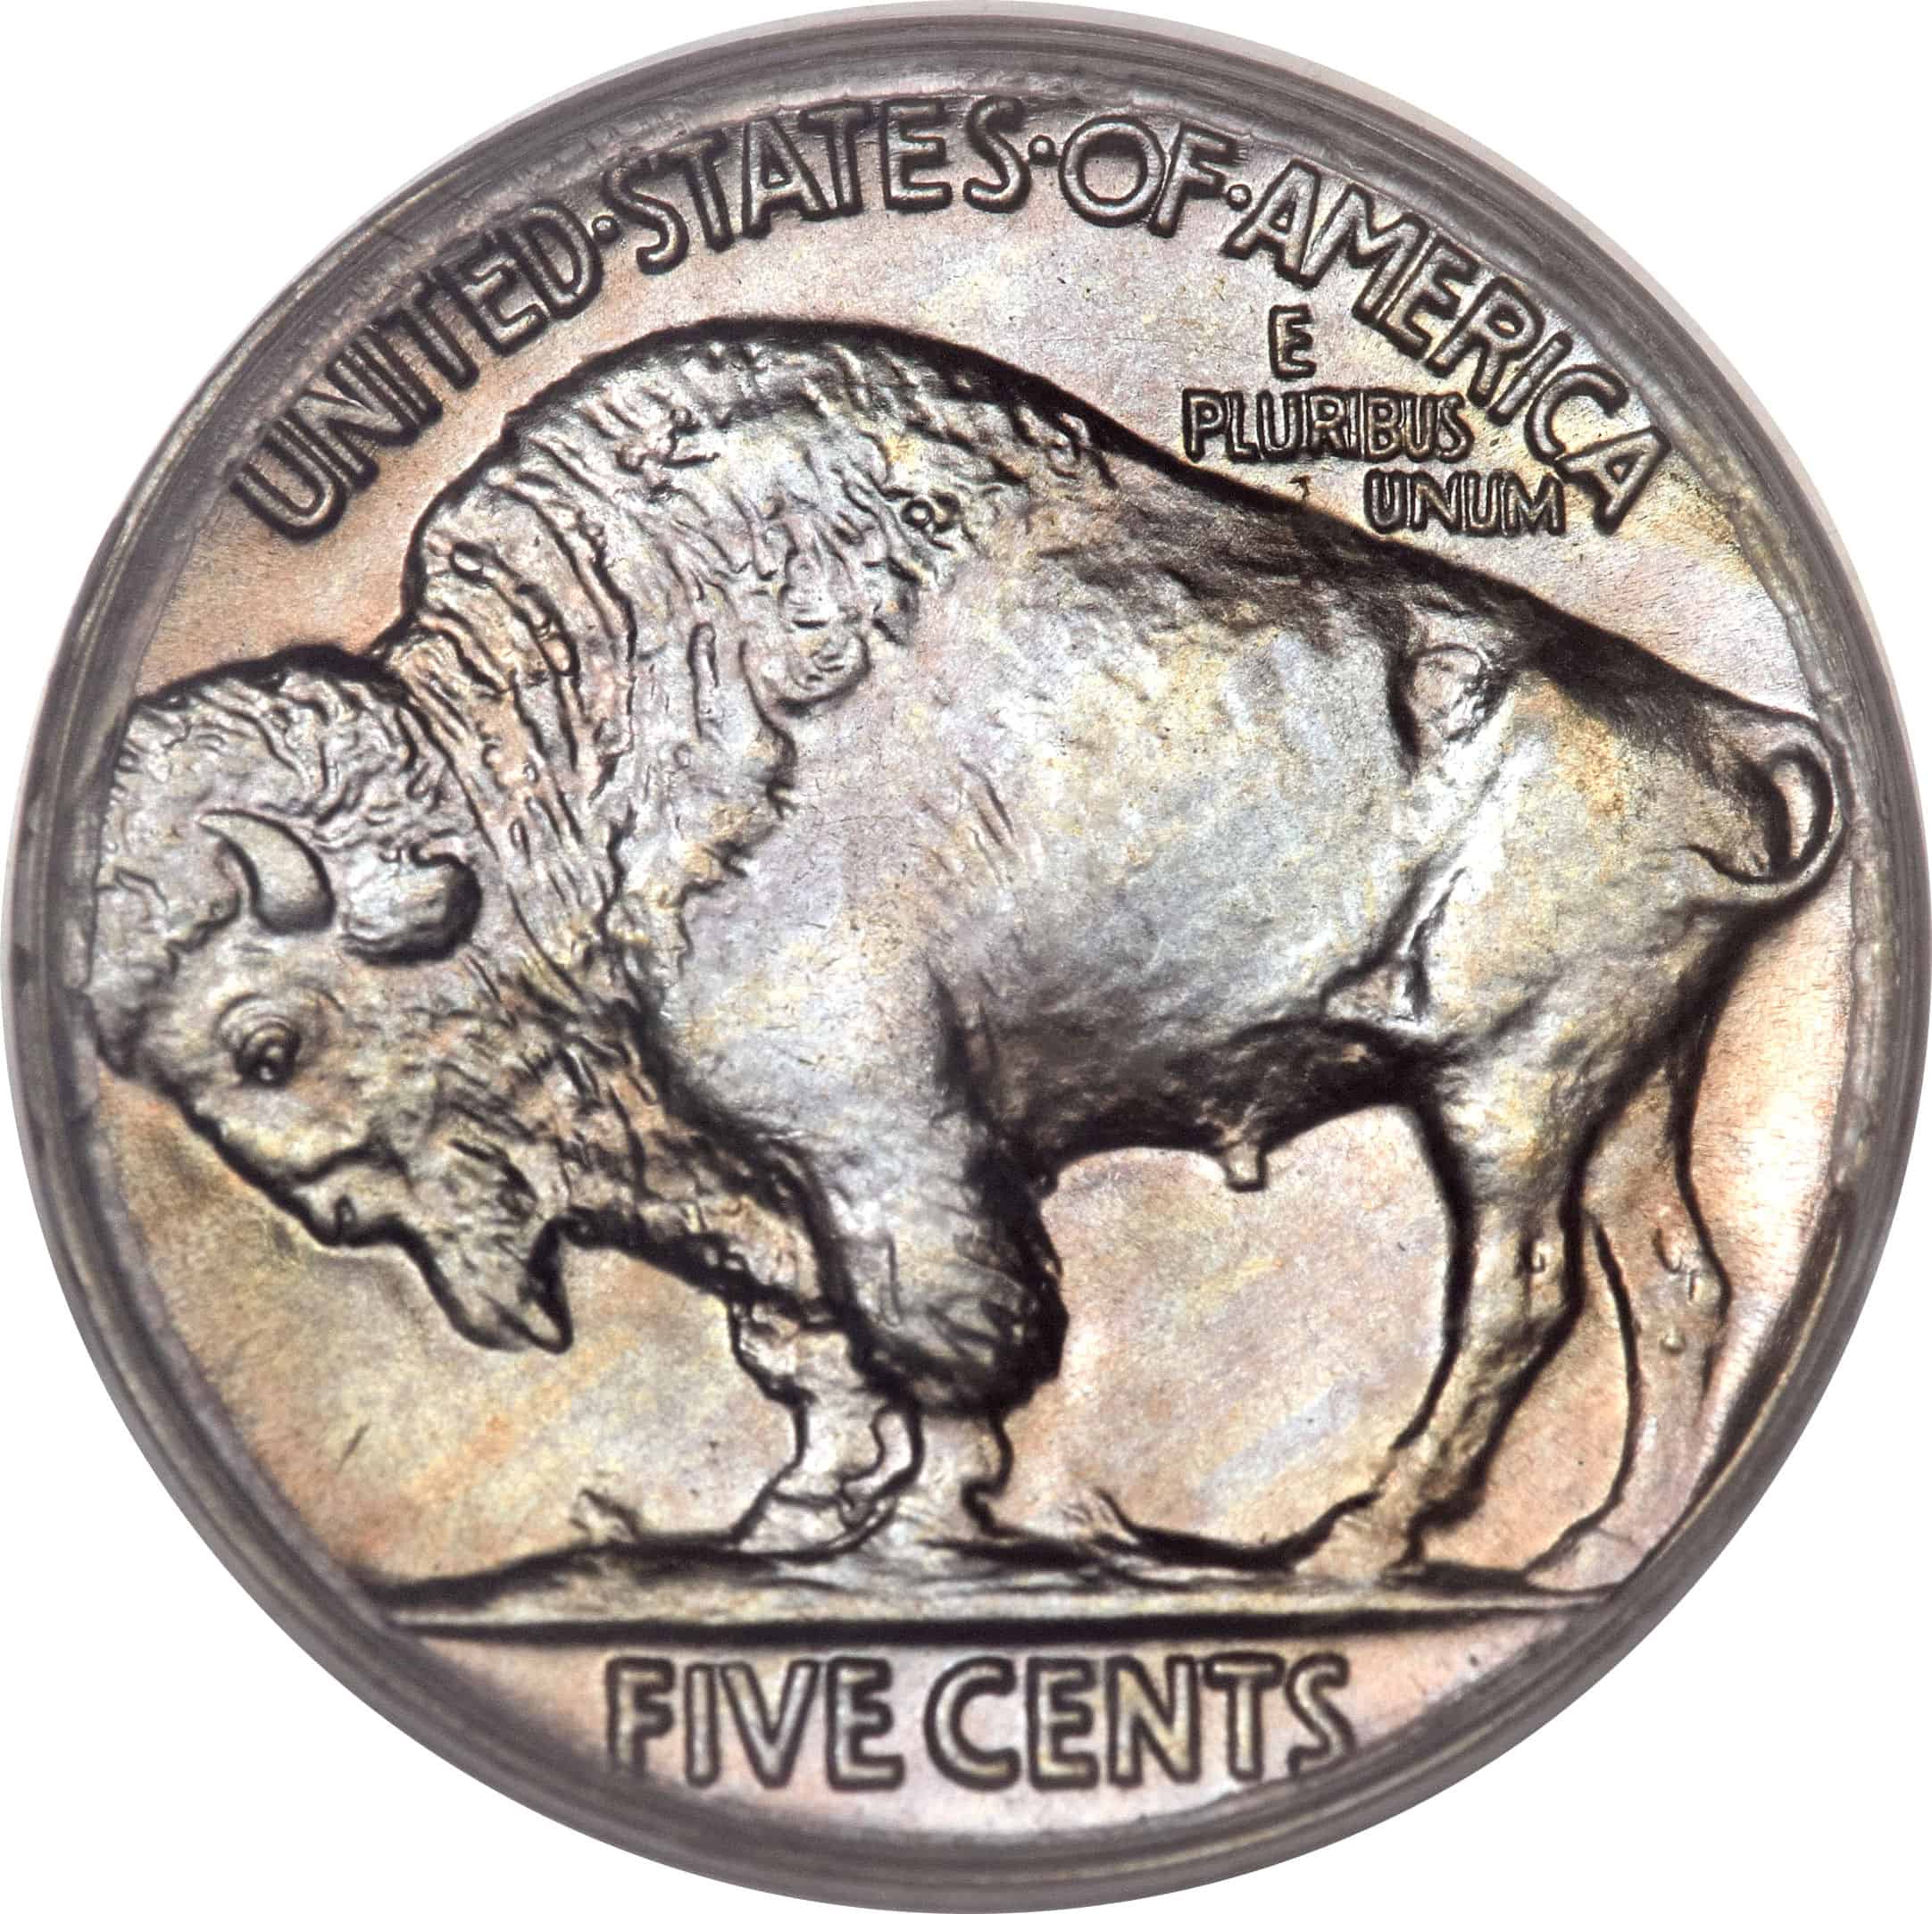 The Reverse of the 1936 Buffalo Nickel